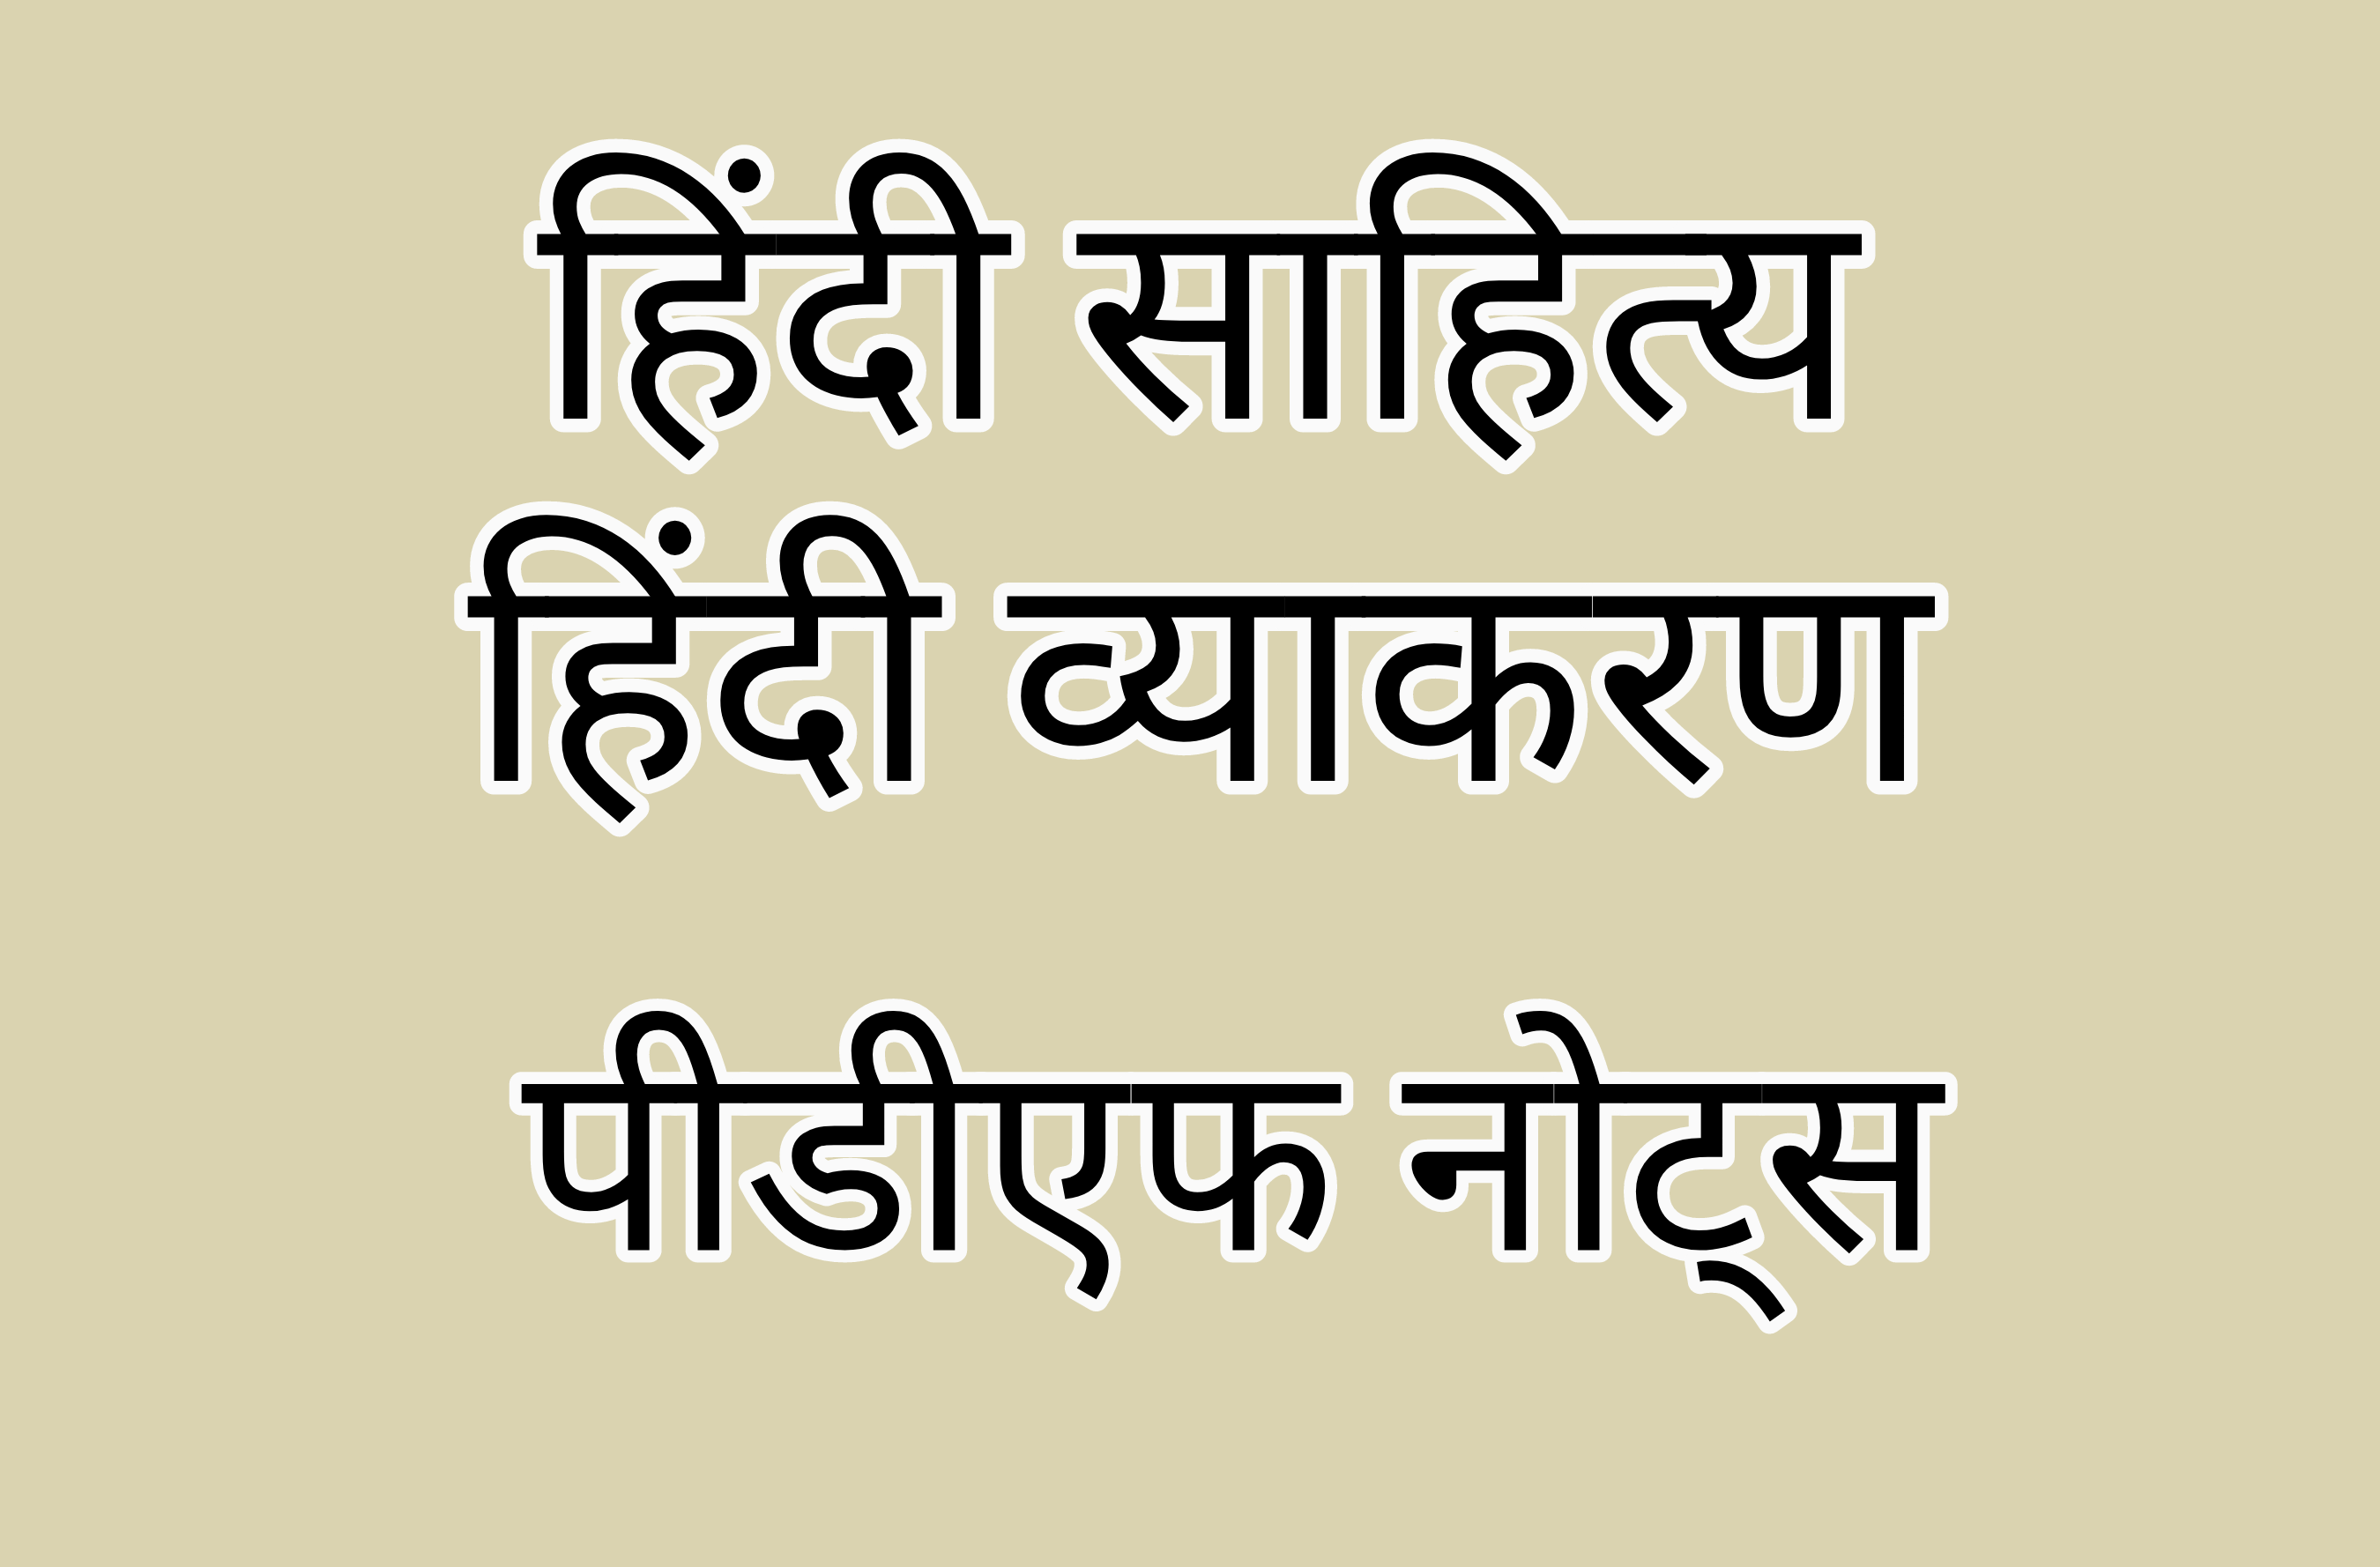 computer notes in hindi pdf for patwari